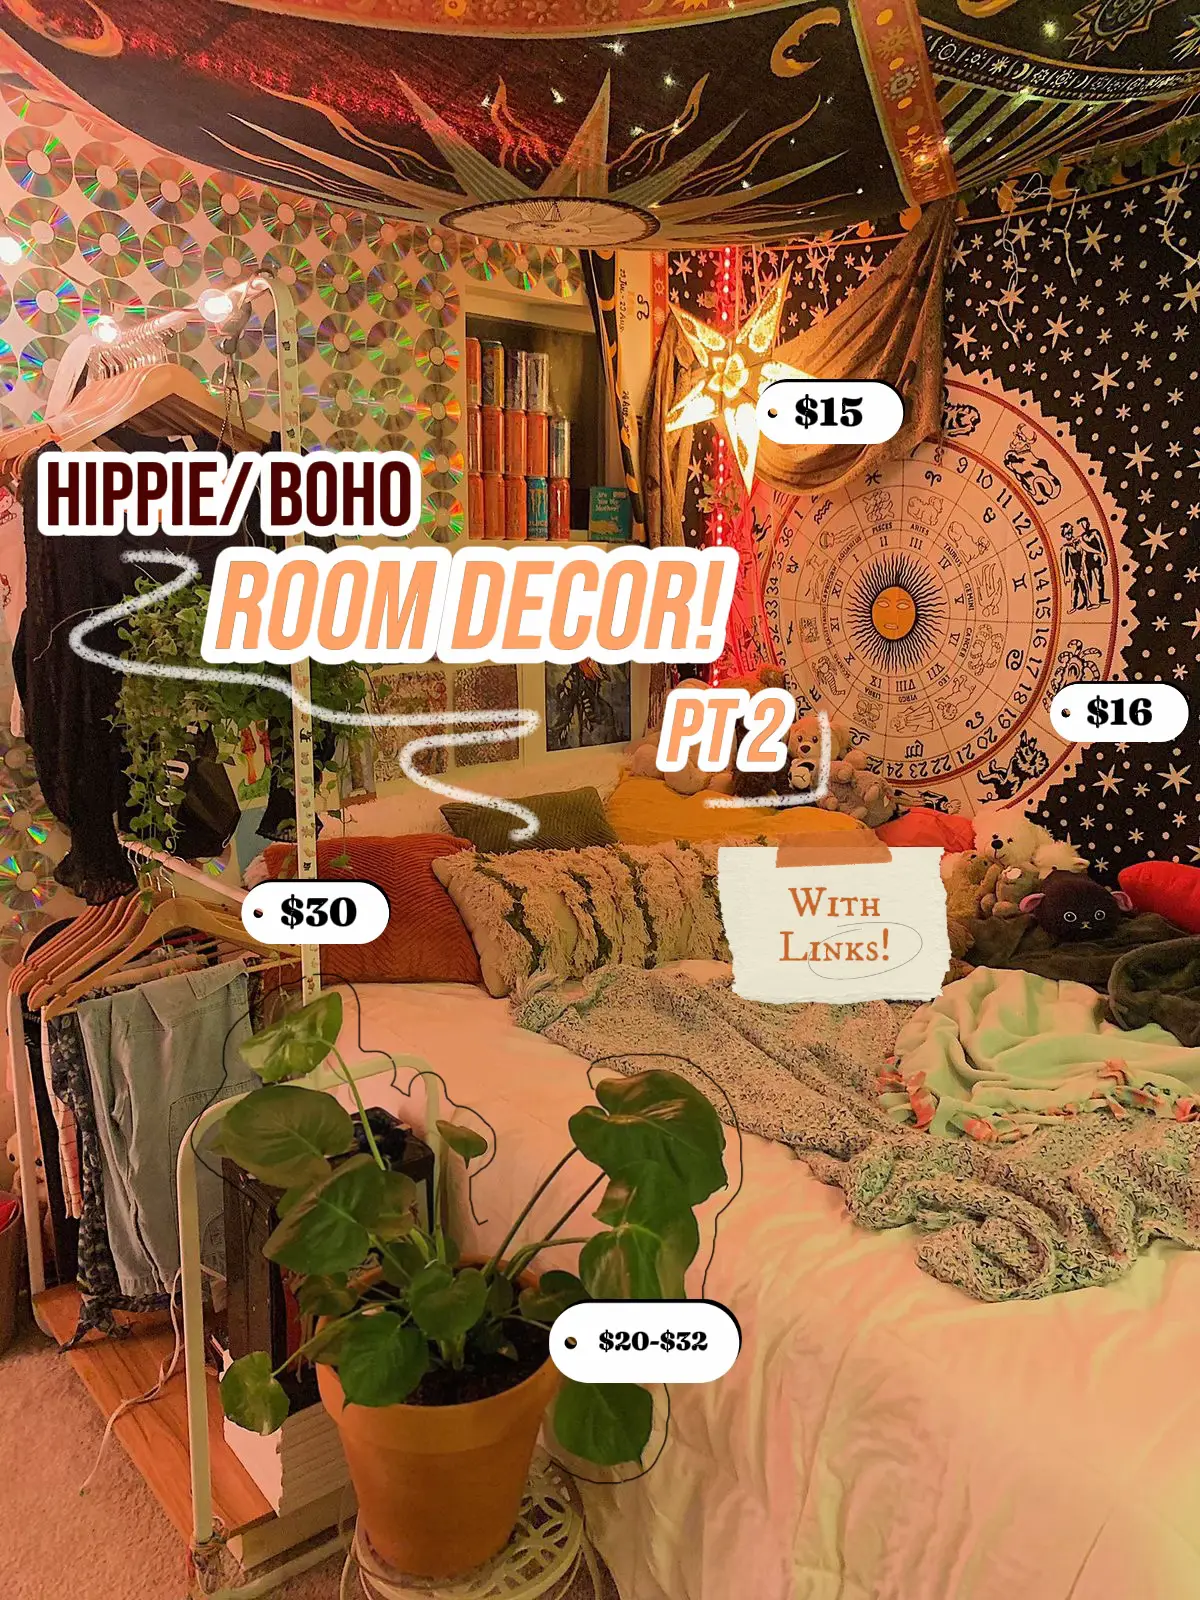 330 Bohemian/Hippie Gift Ideas  hippy gifts, hippie, hippie bohemian